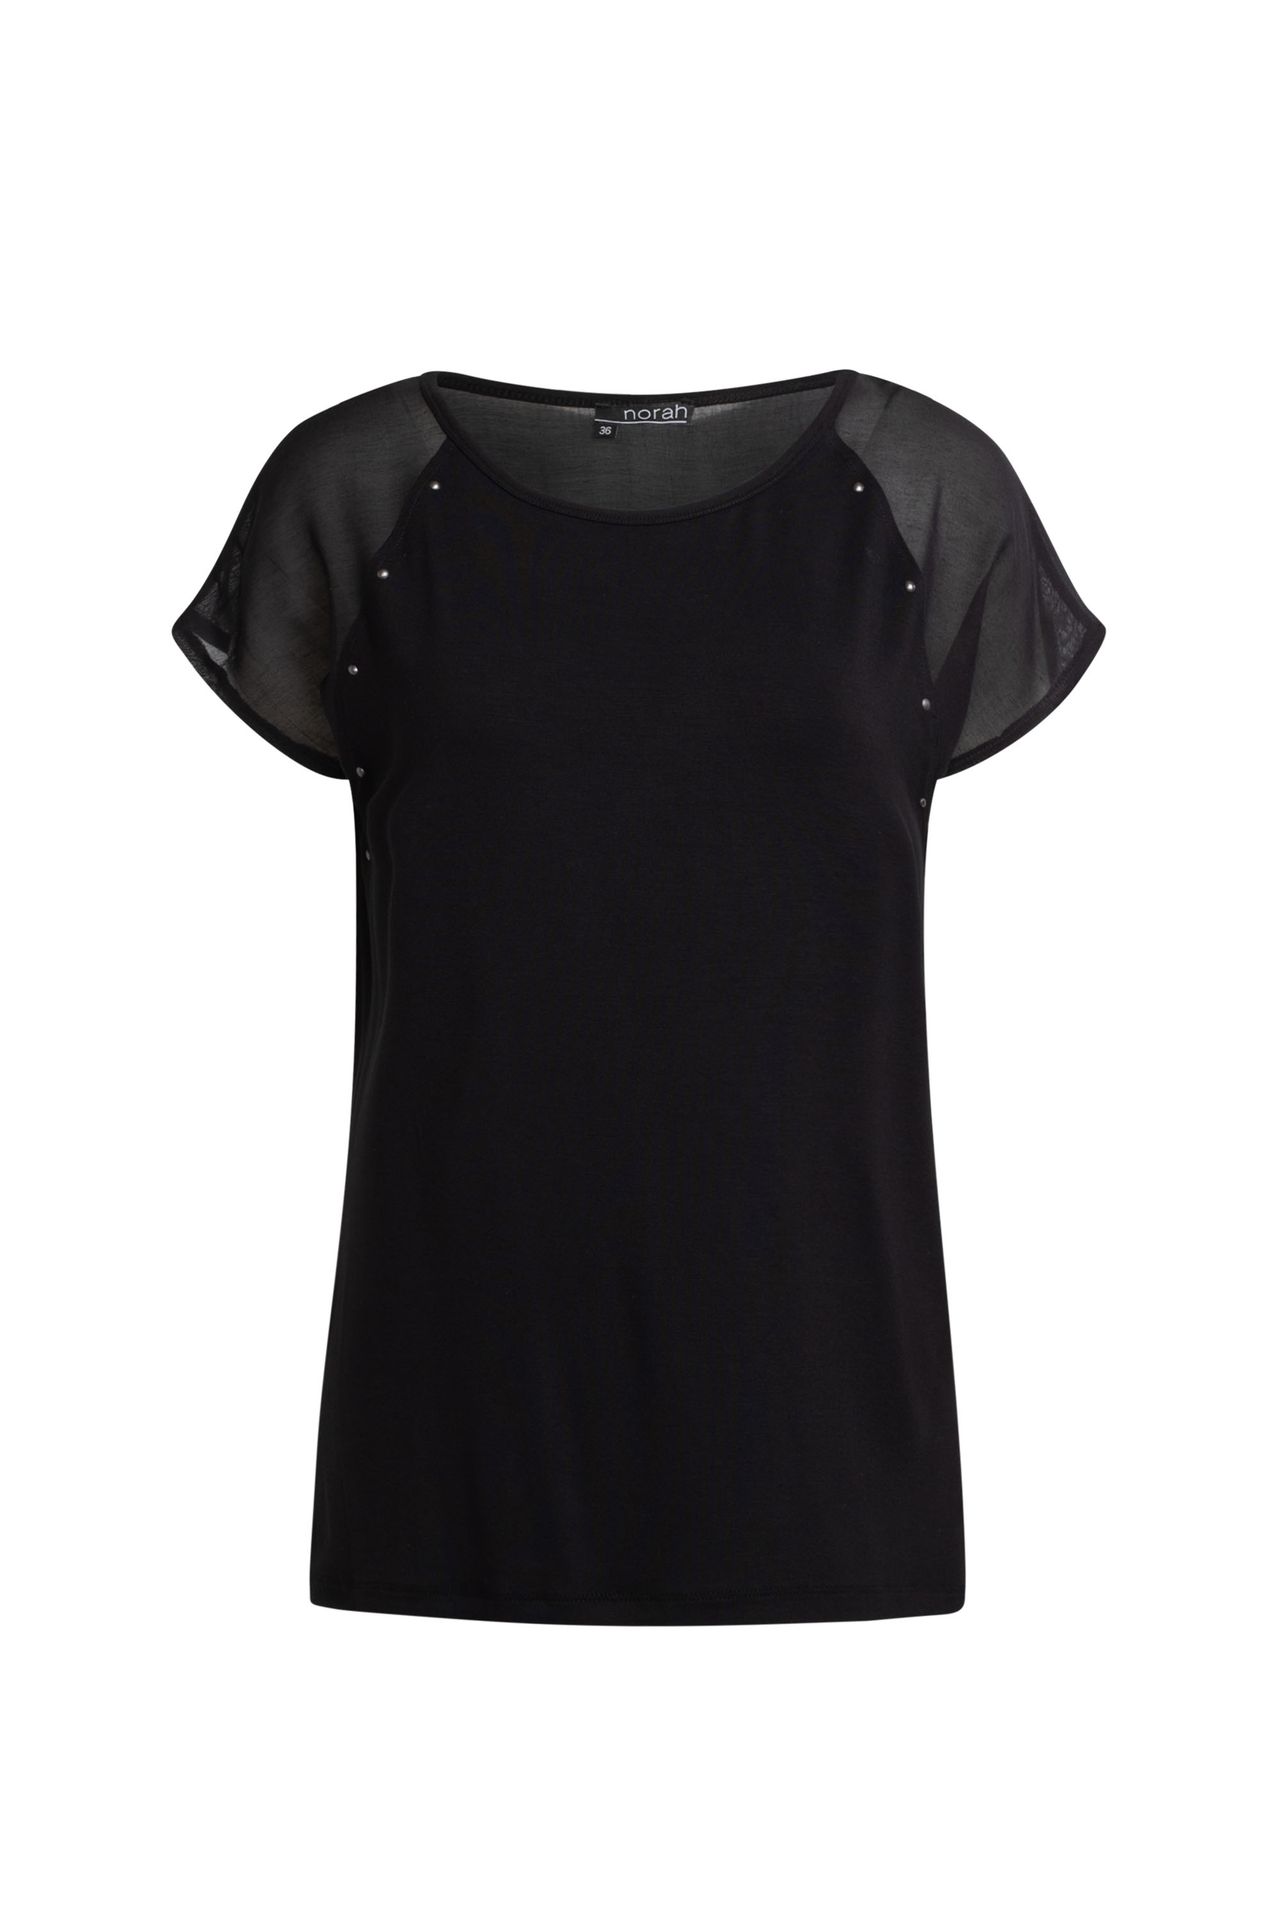 Norah Zwart shirt black 209719-001